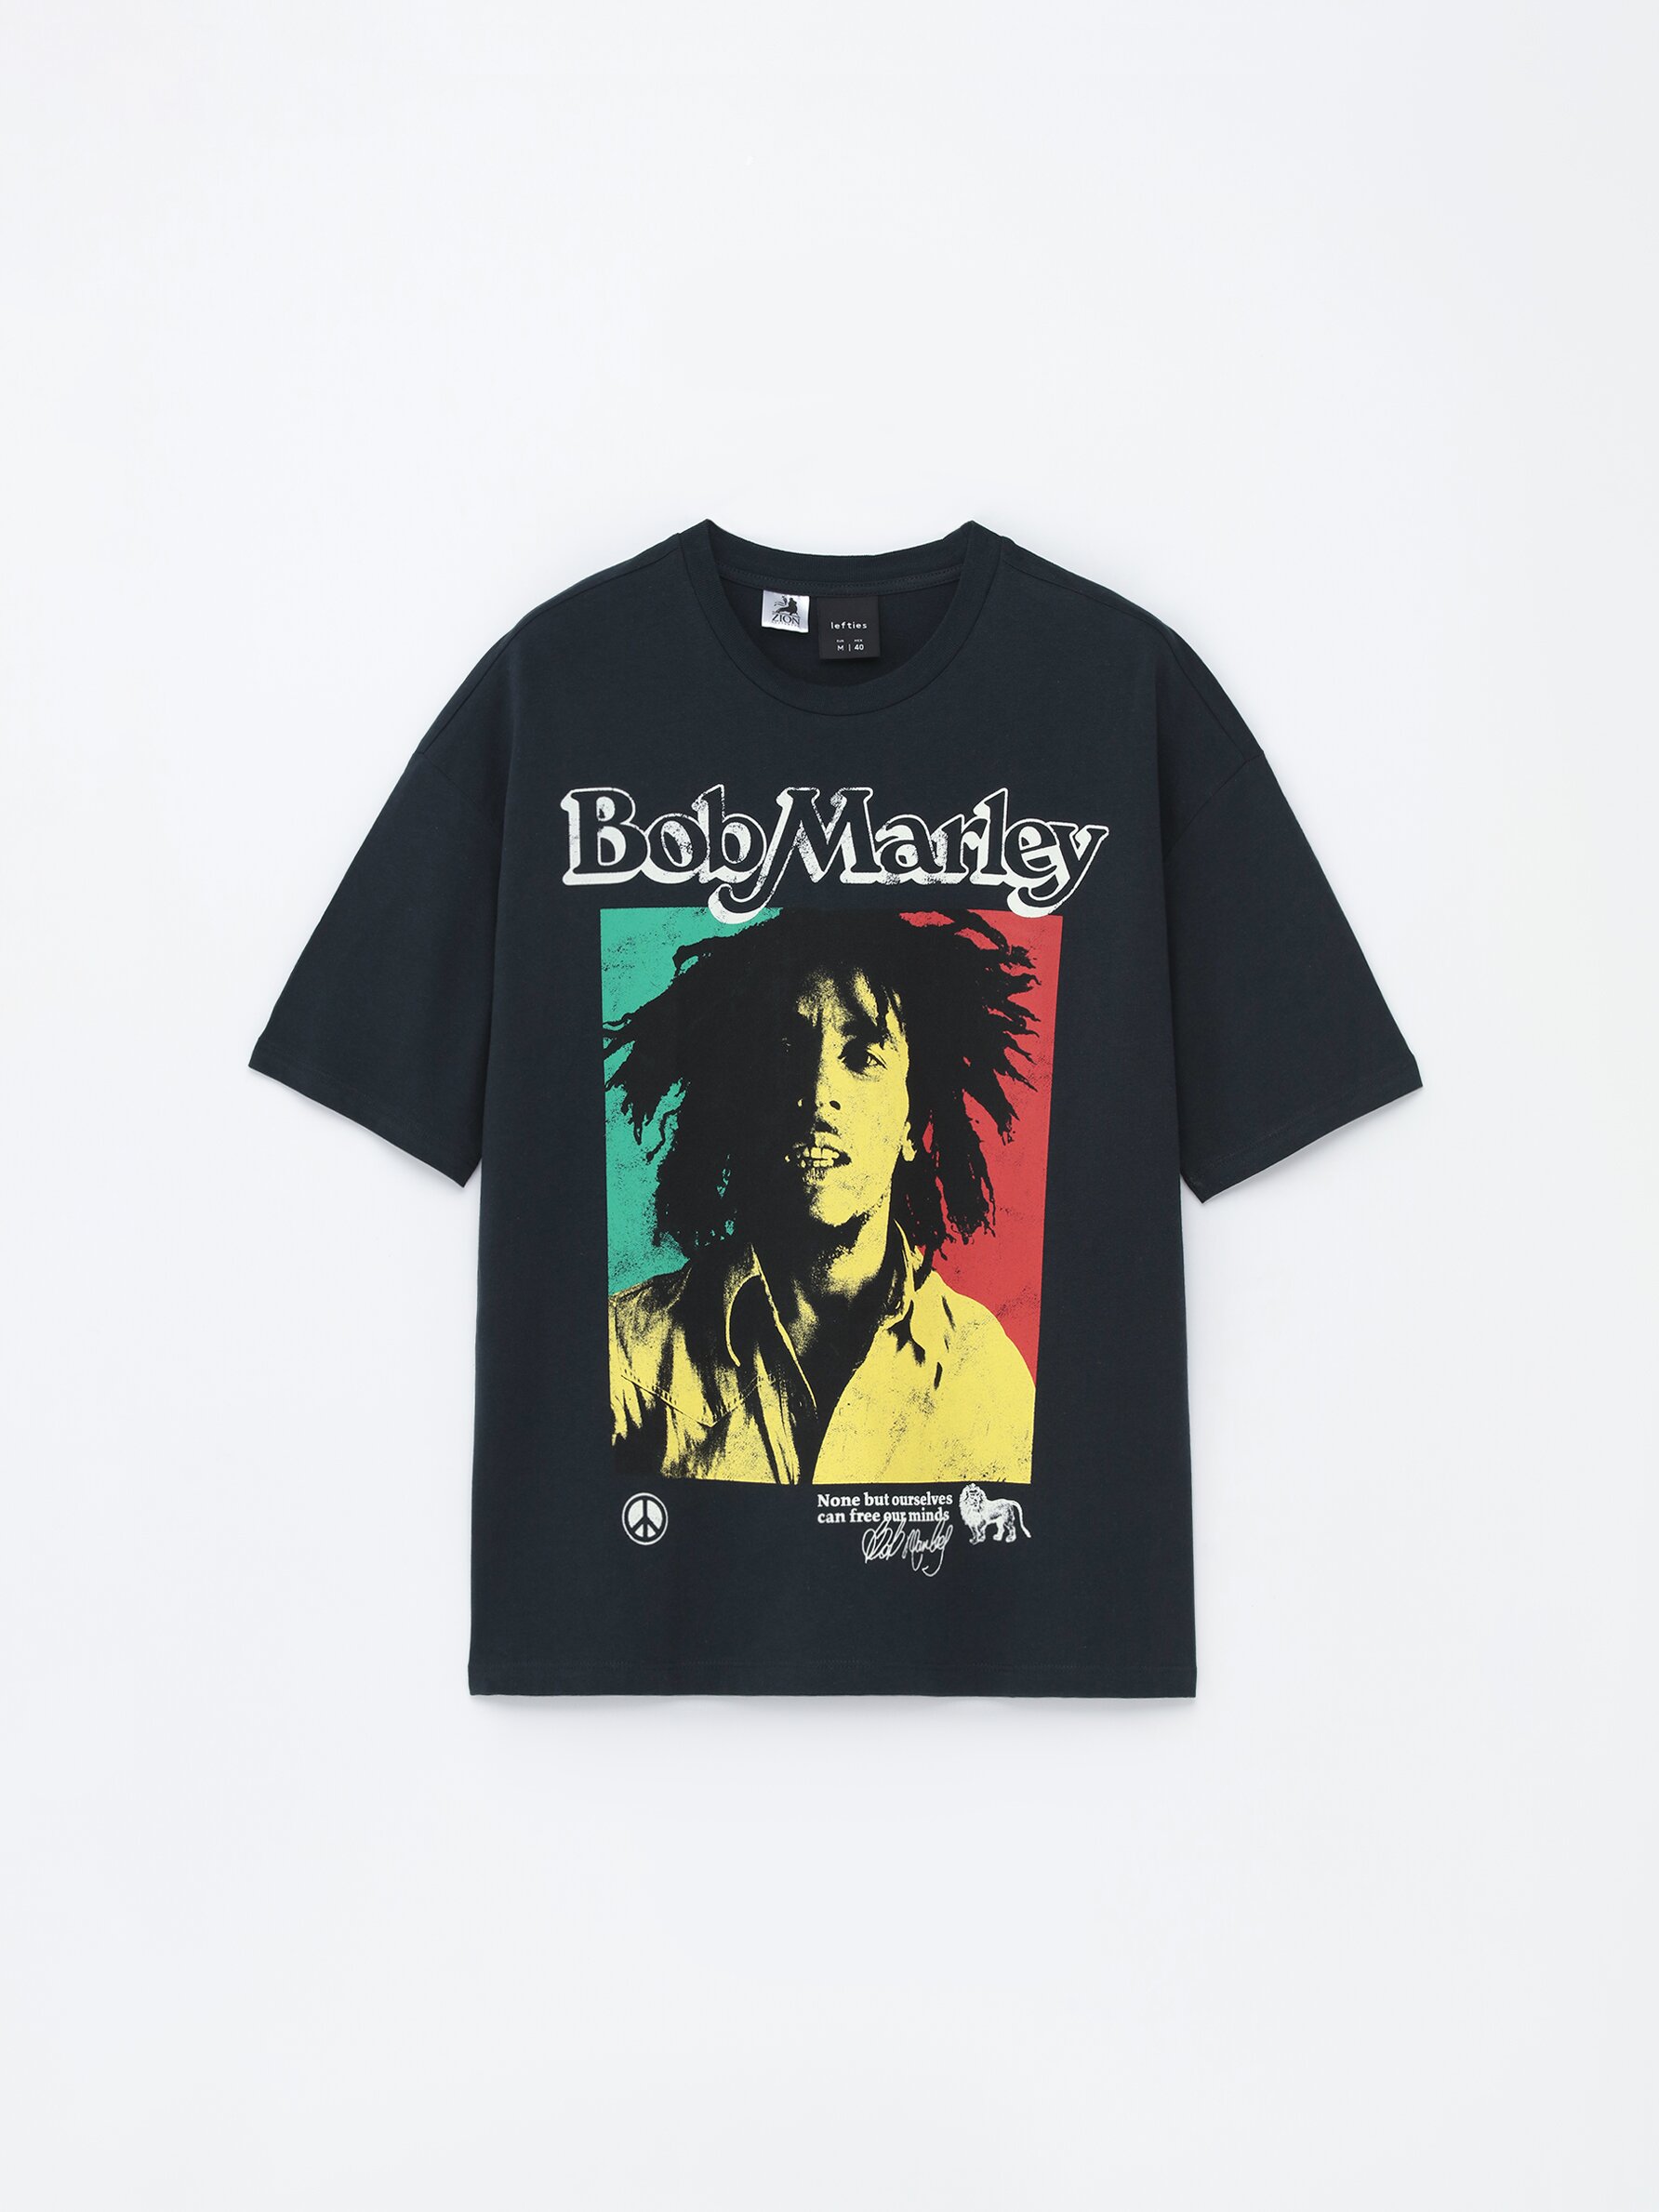 Bob Marley ©Universal maxi print T-shirt - Printed T-shirts - T